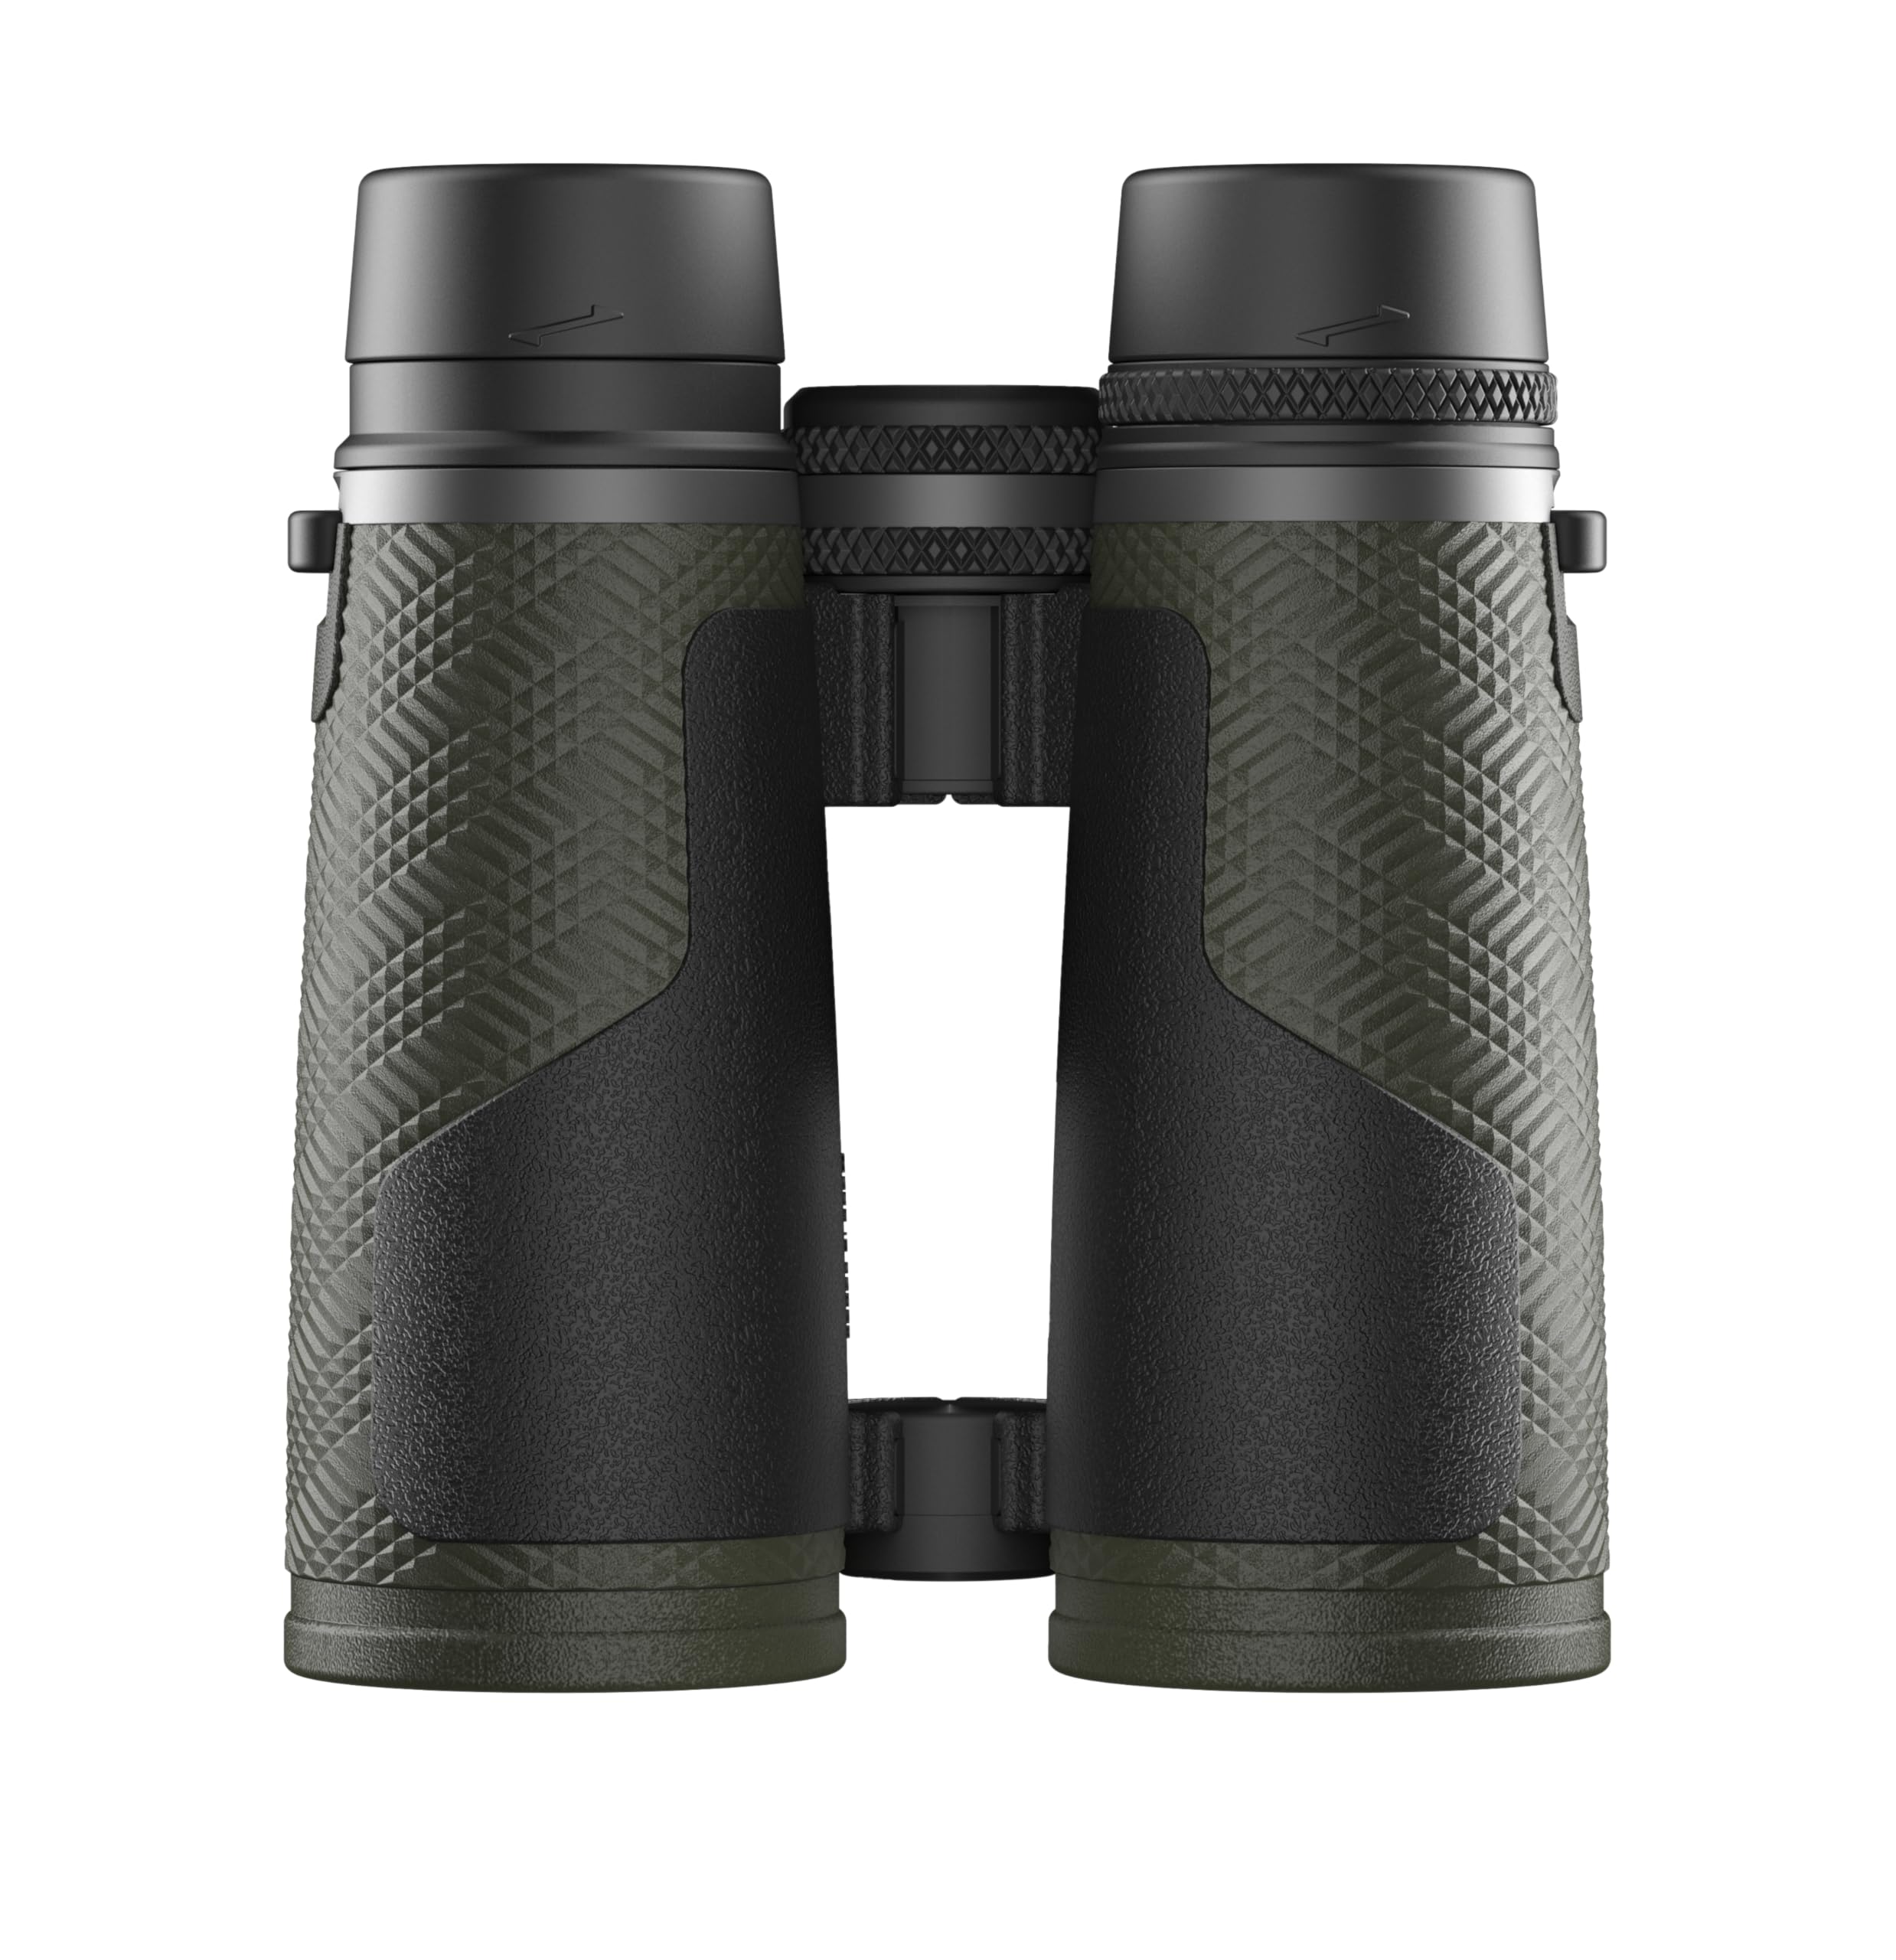 Burris Signature HD 8x42 Hunting Binoculars